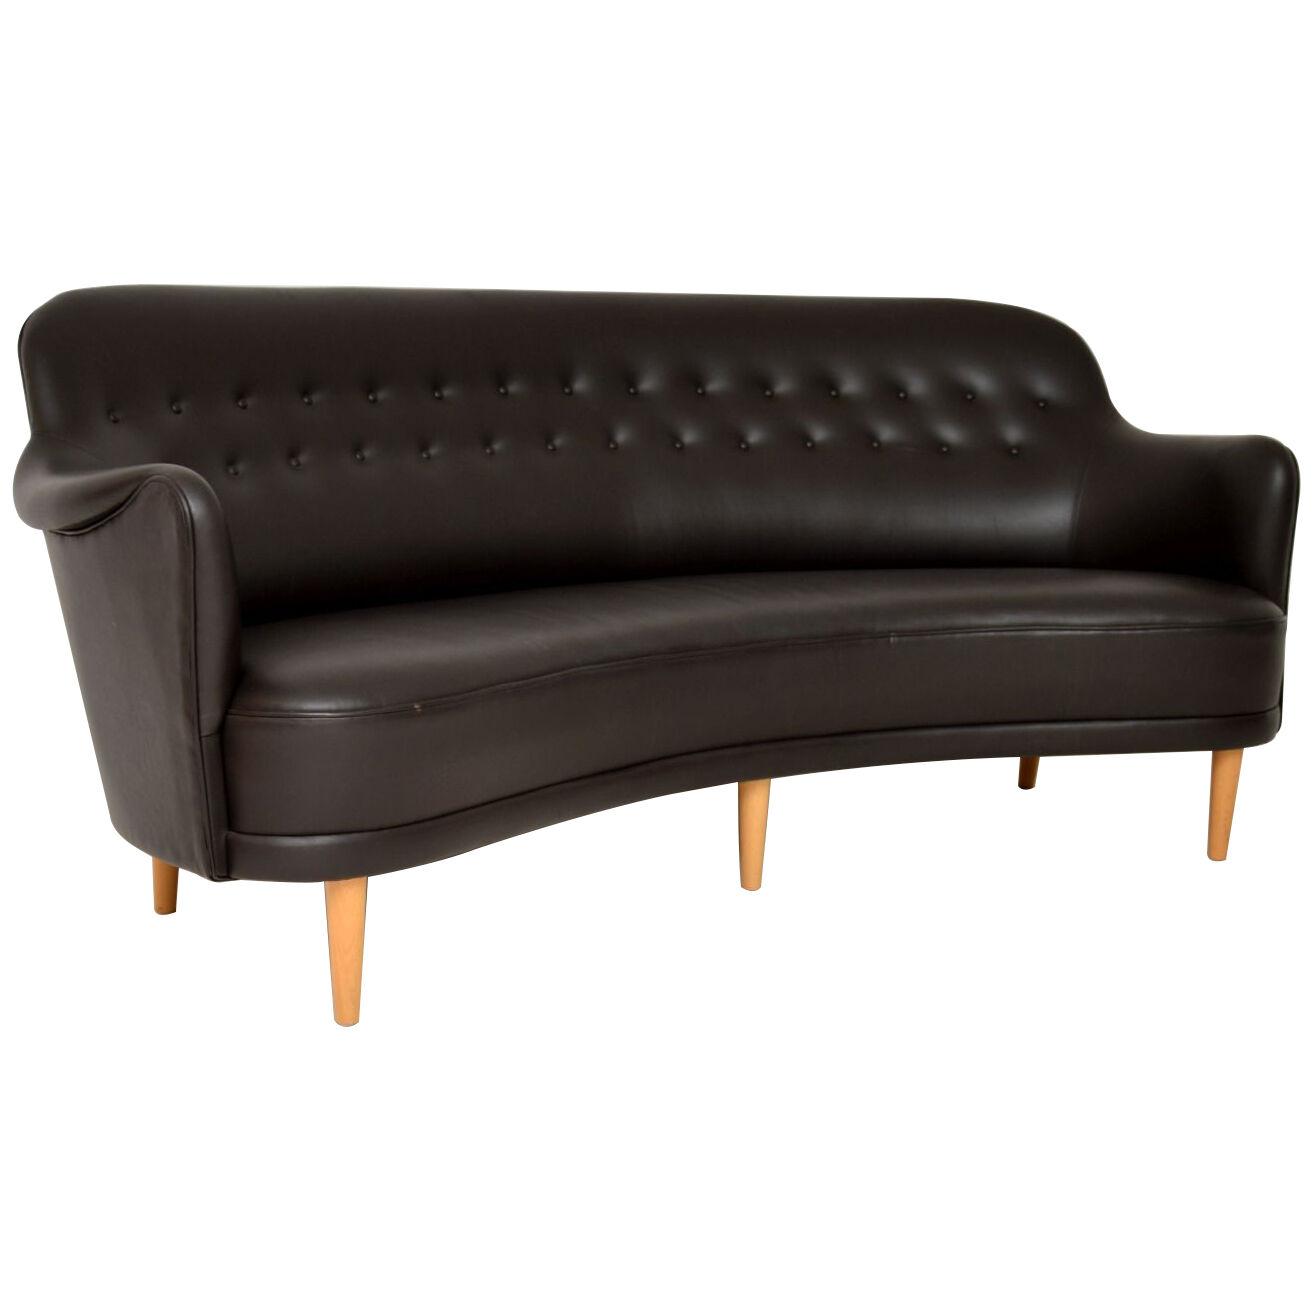 Swedish Leather Samsas Round Sofa by Carl Malmsten